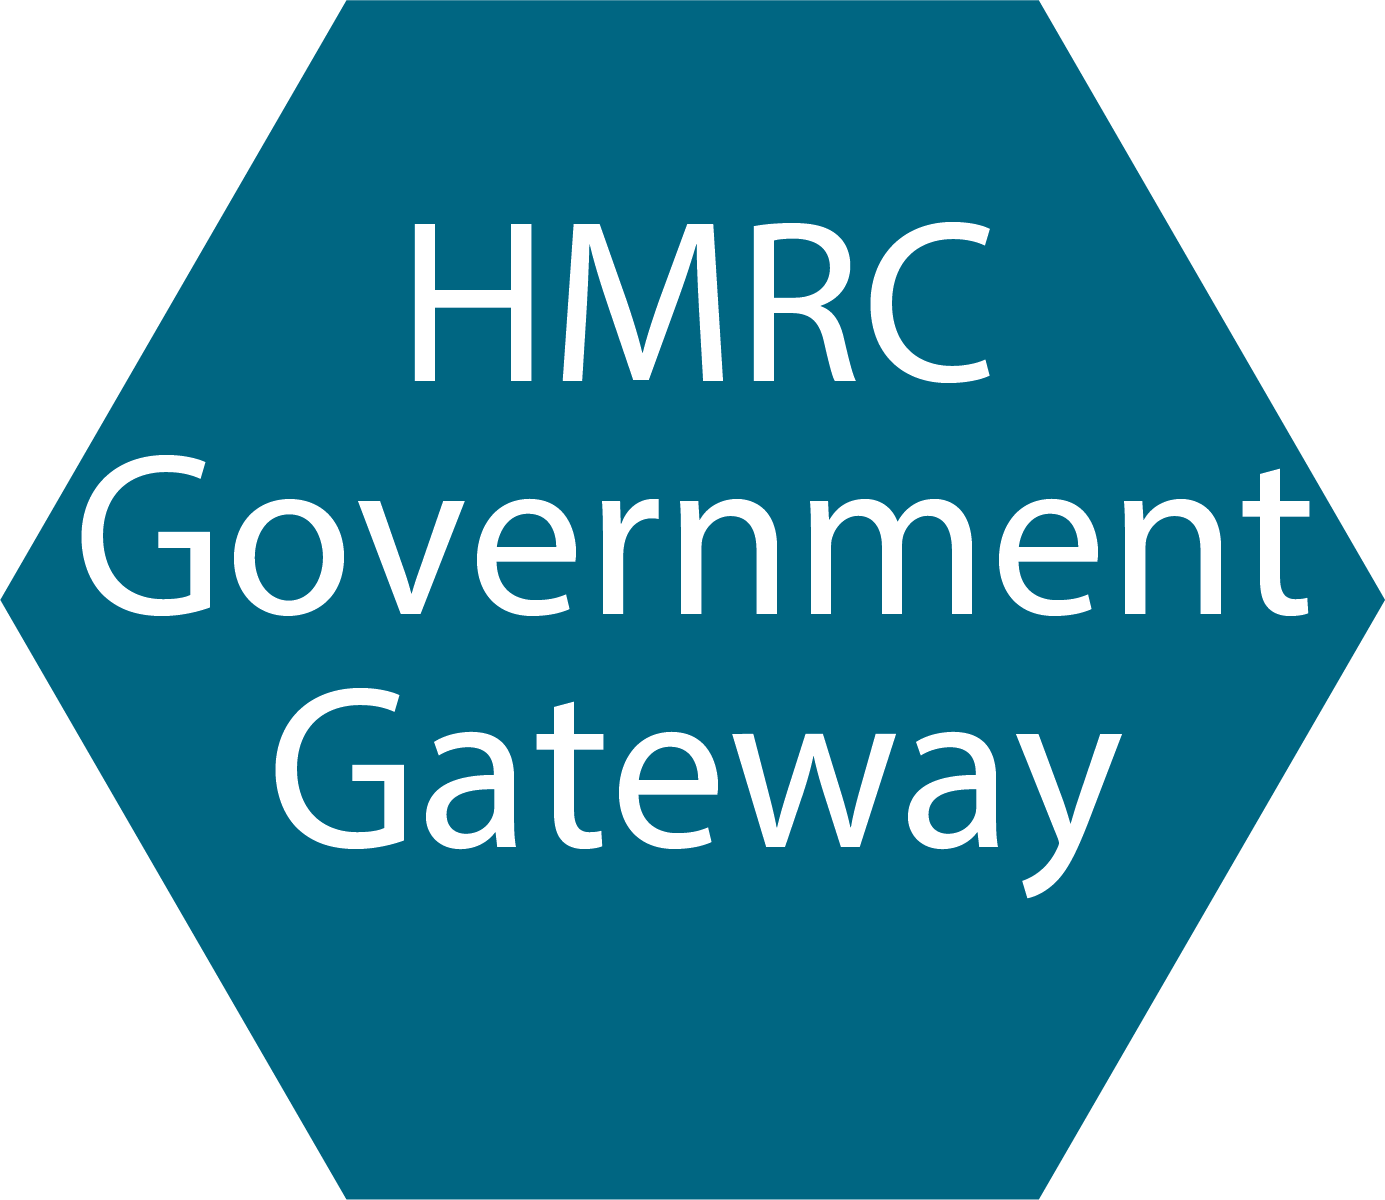 HMRC Government Gateway